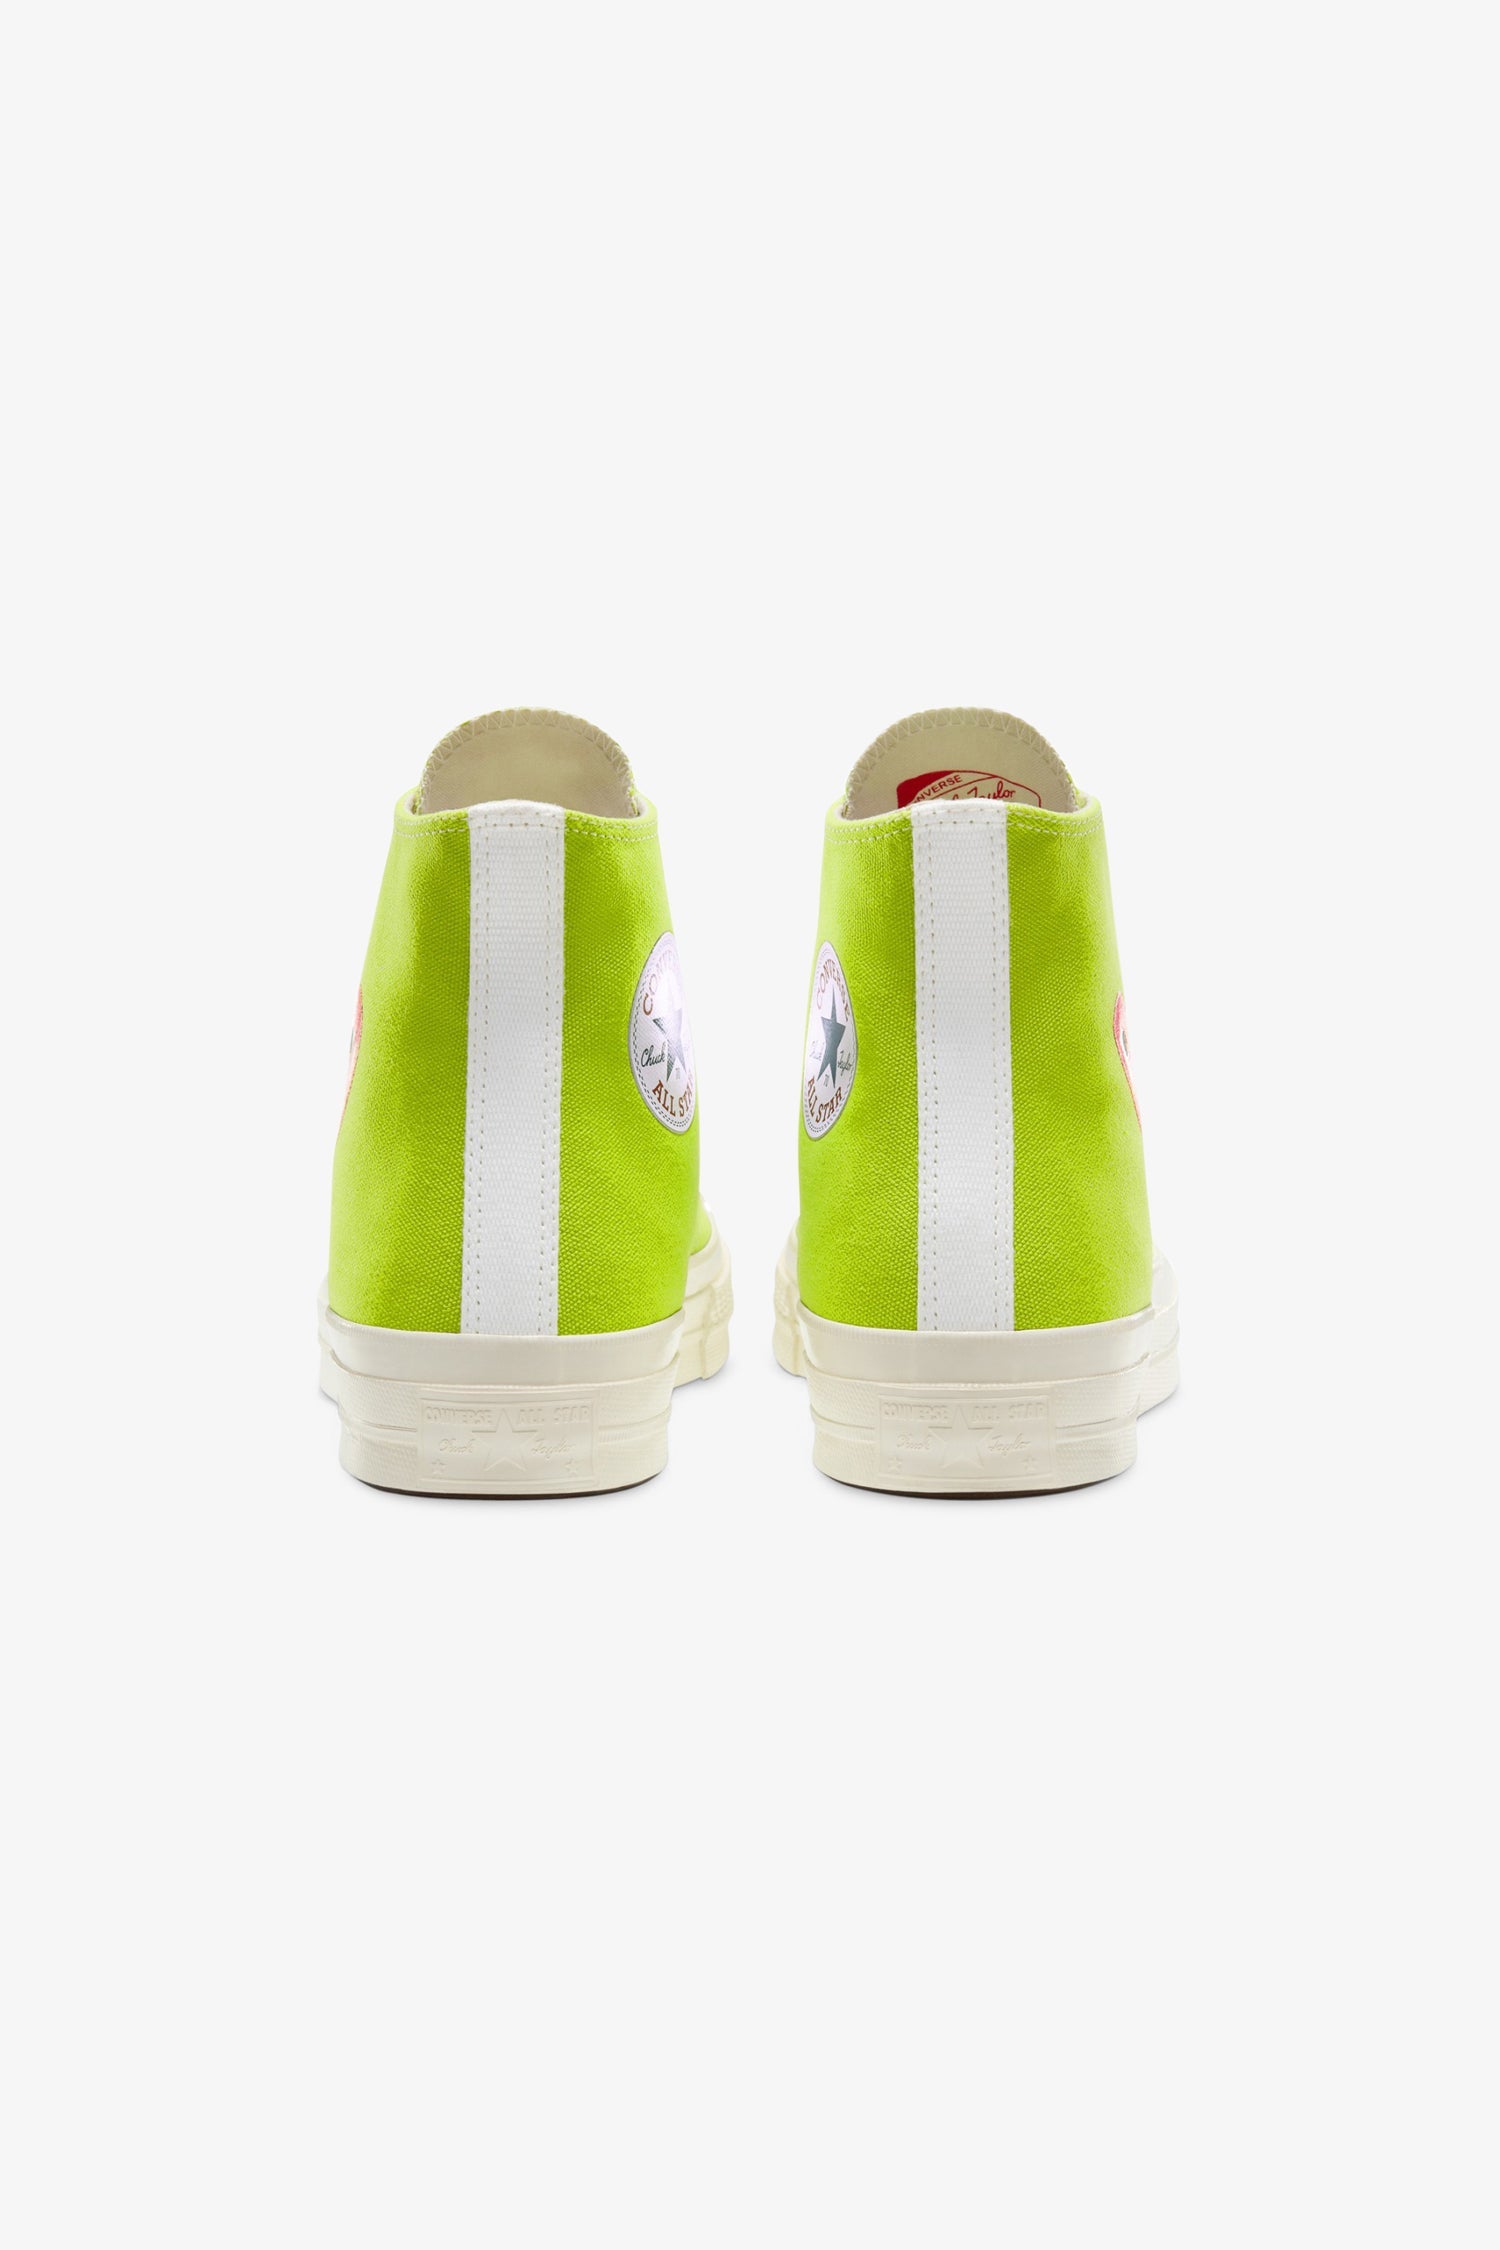 Selectshop FRAME - COMME DES GARCONS PLAY(MOE) Play Comme des Garçons x Converse Chuck '70 High (Bright Green)(MOE) Footwear Dubai